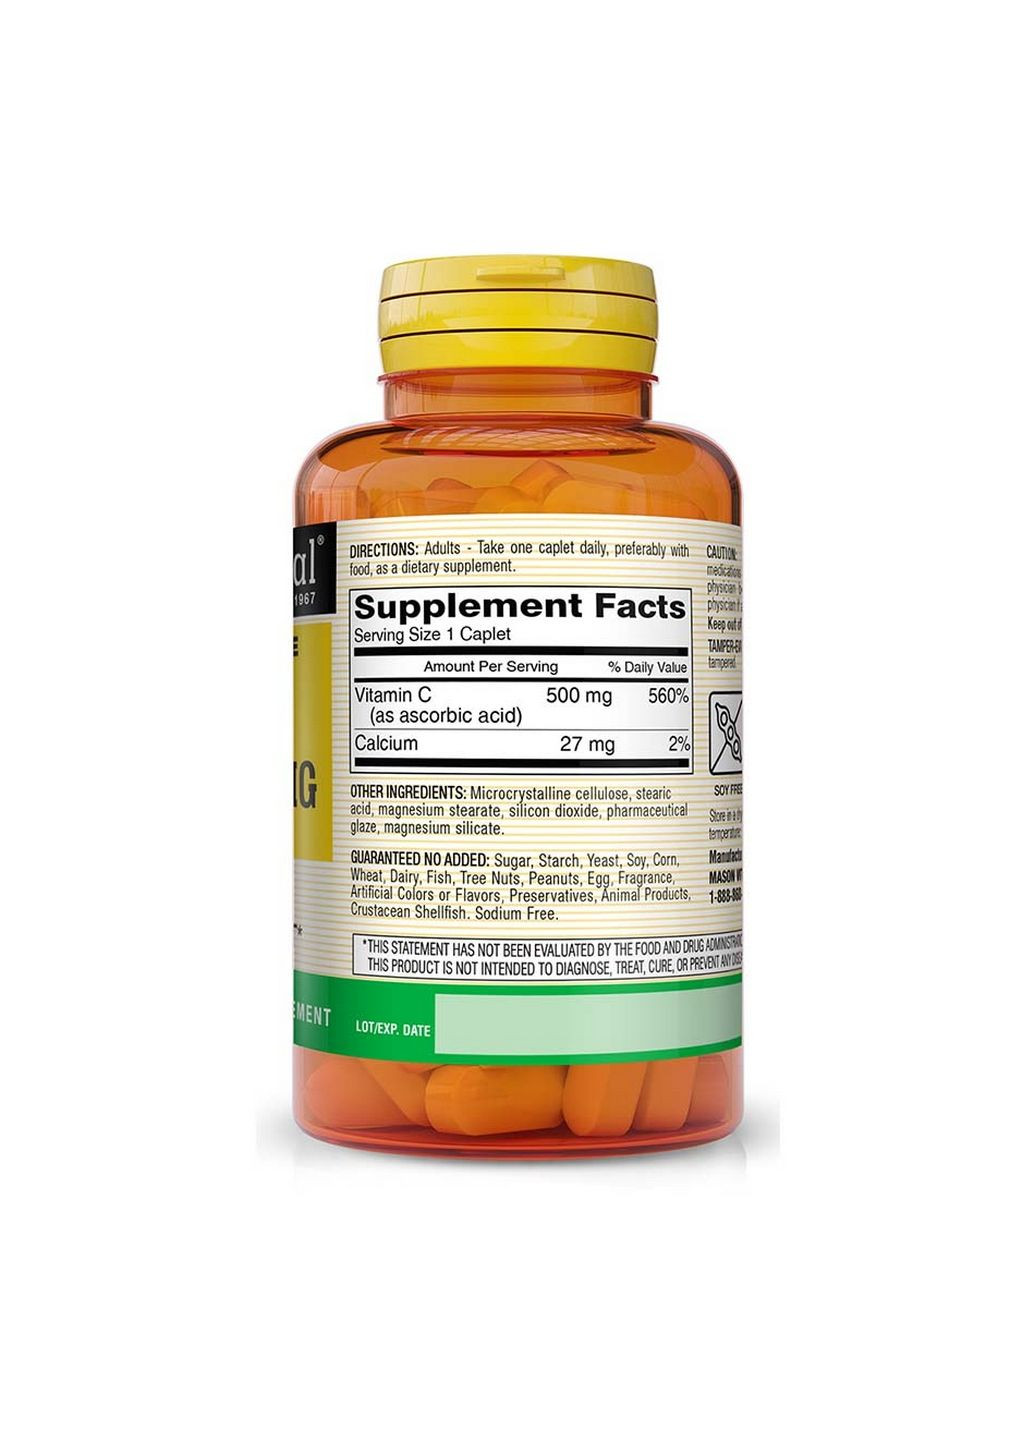 Вітаміни та мінерали Vitamin C 500 mg Delayed Release, 100 каплет Mason Natural (293418233)